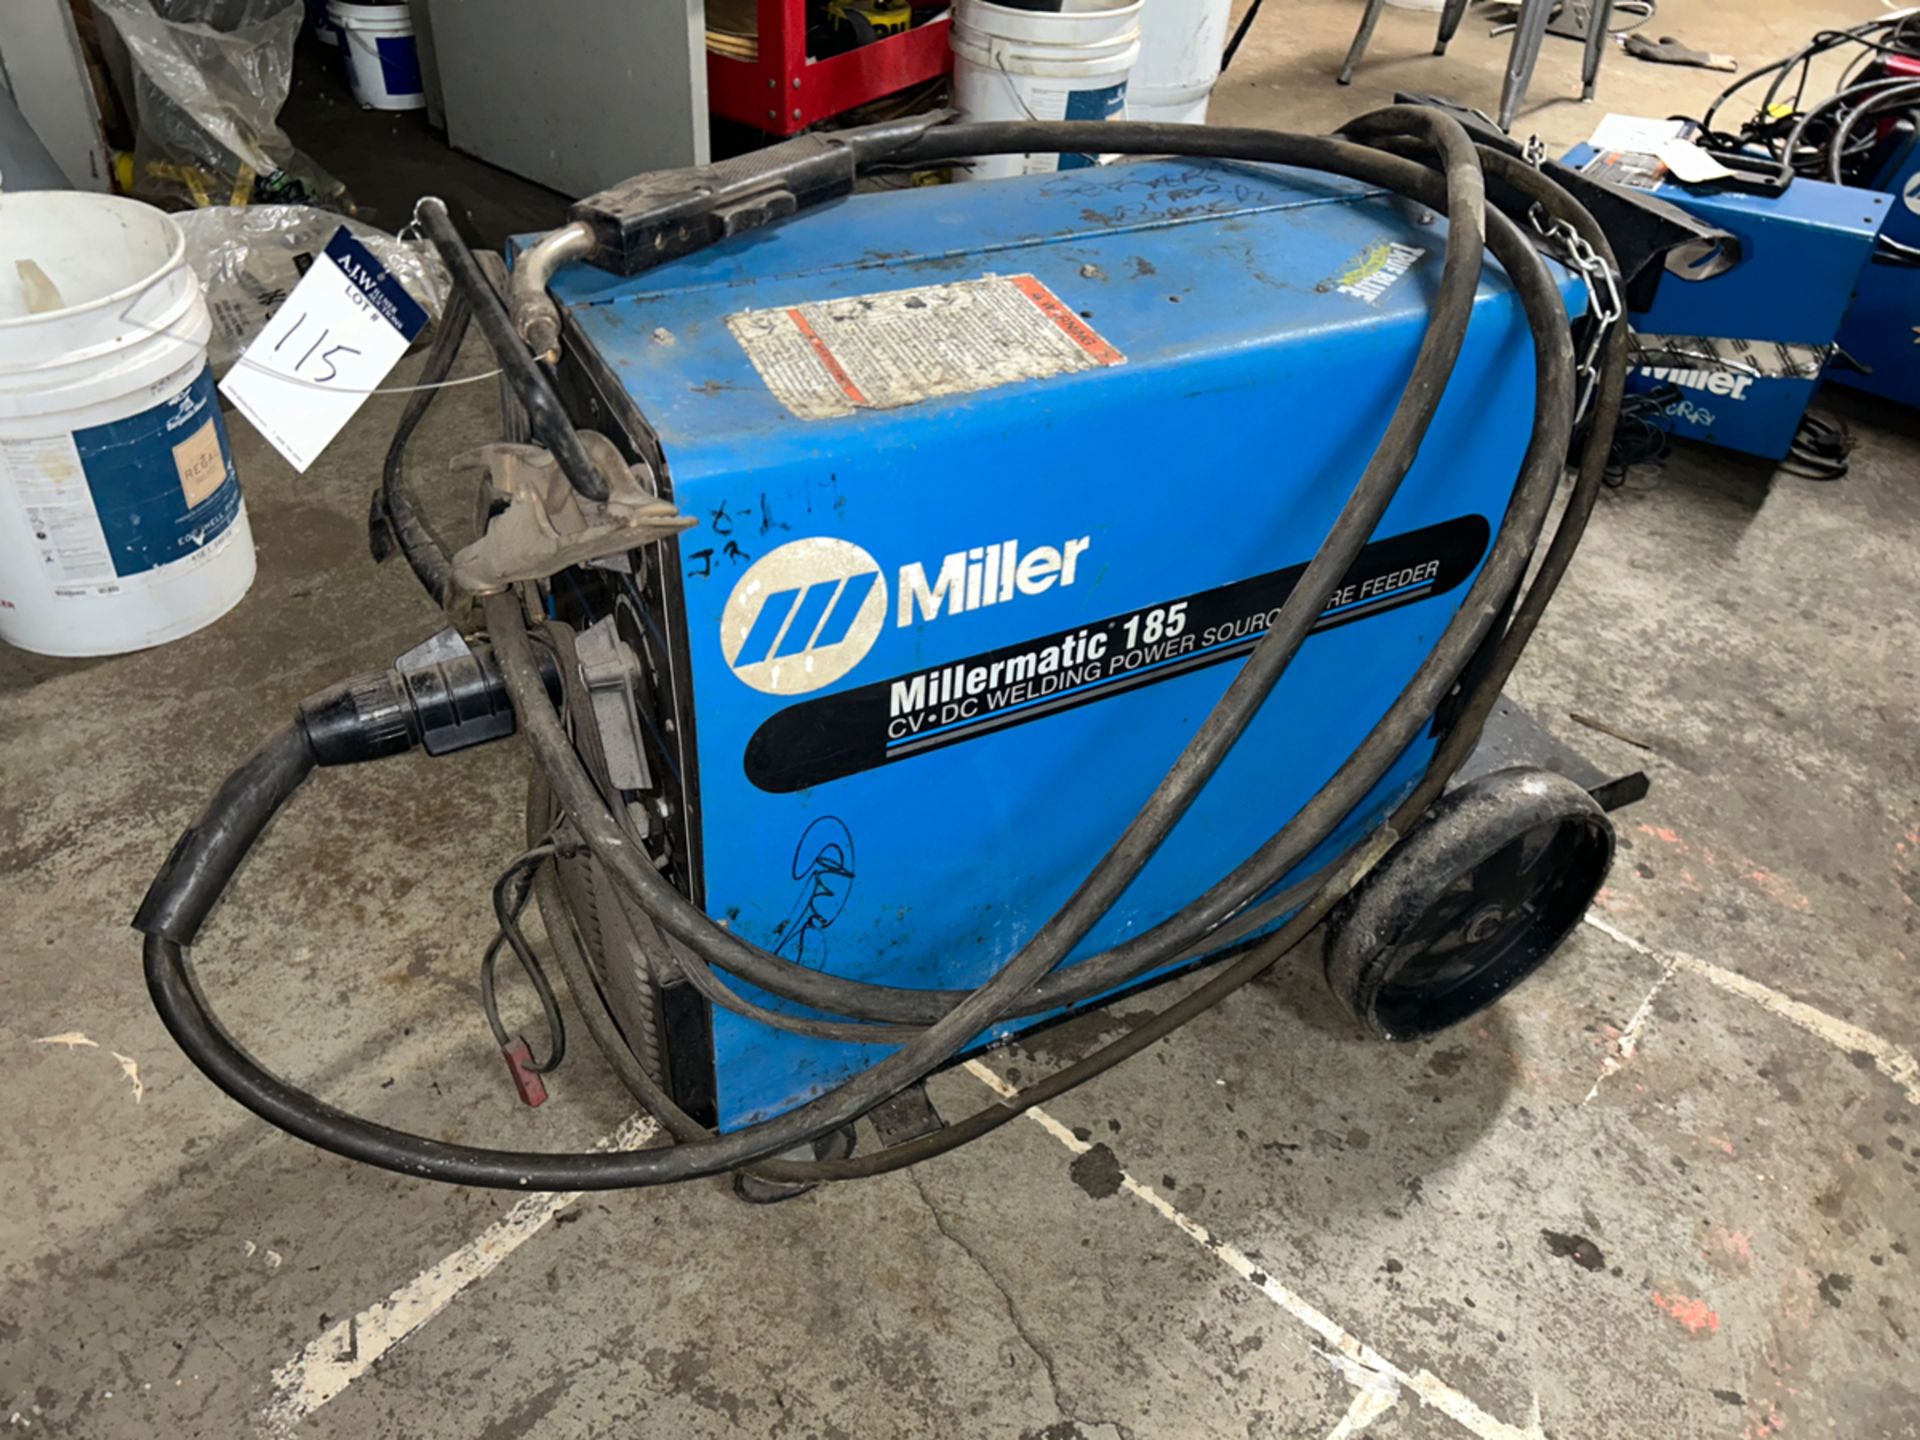 Miller Millermatic 185 Wire Feed Mig Welder CV DC